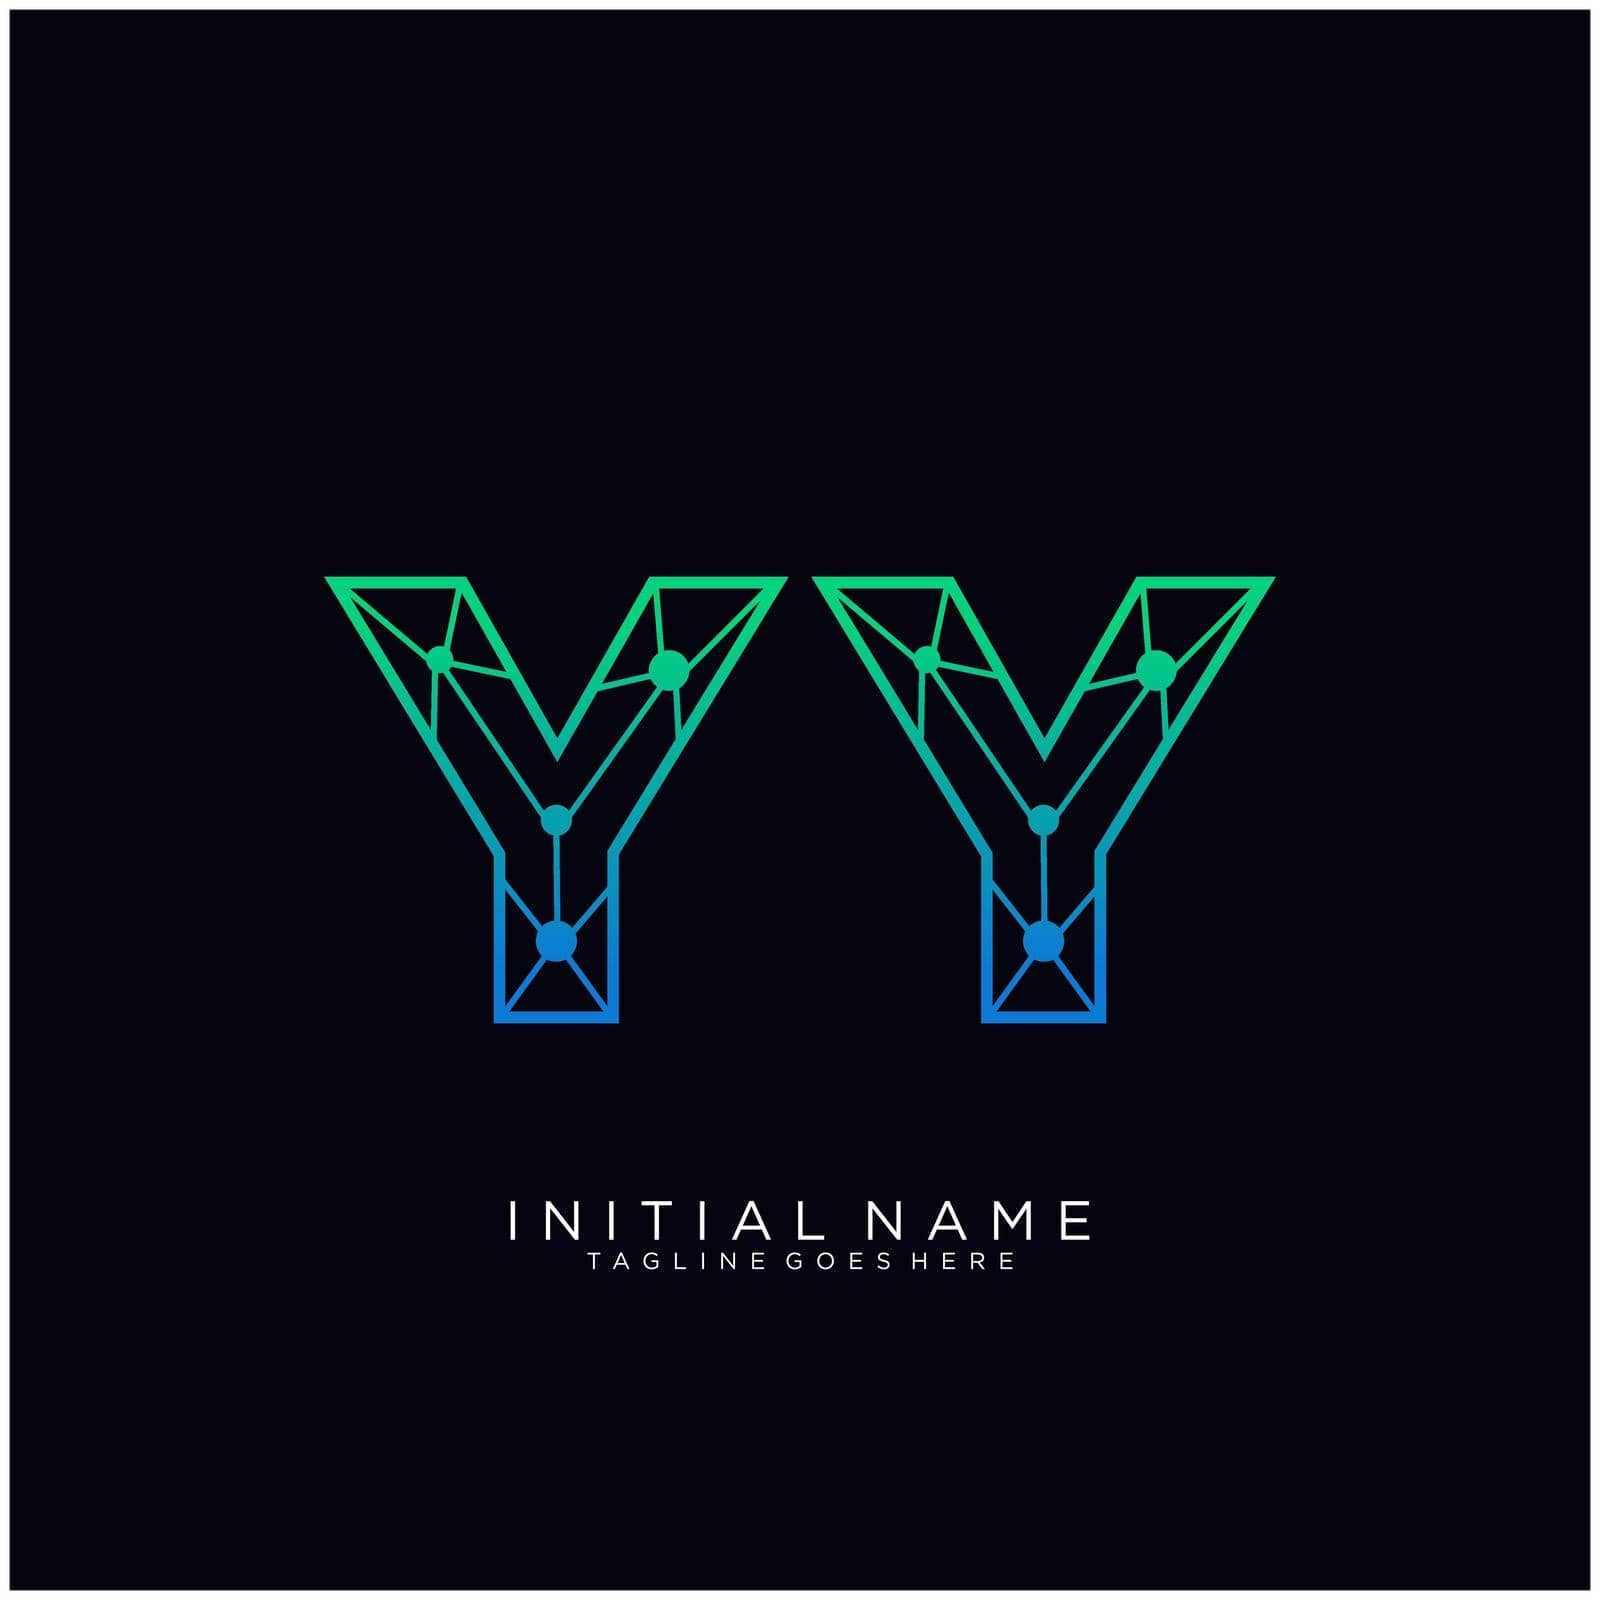 YY Letter logo icon design template elements by liaanniesatul